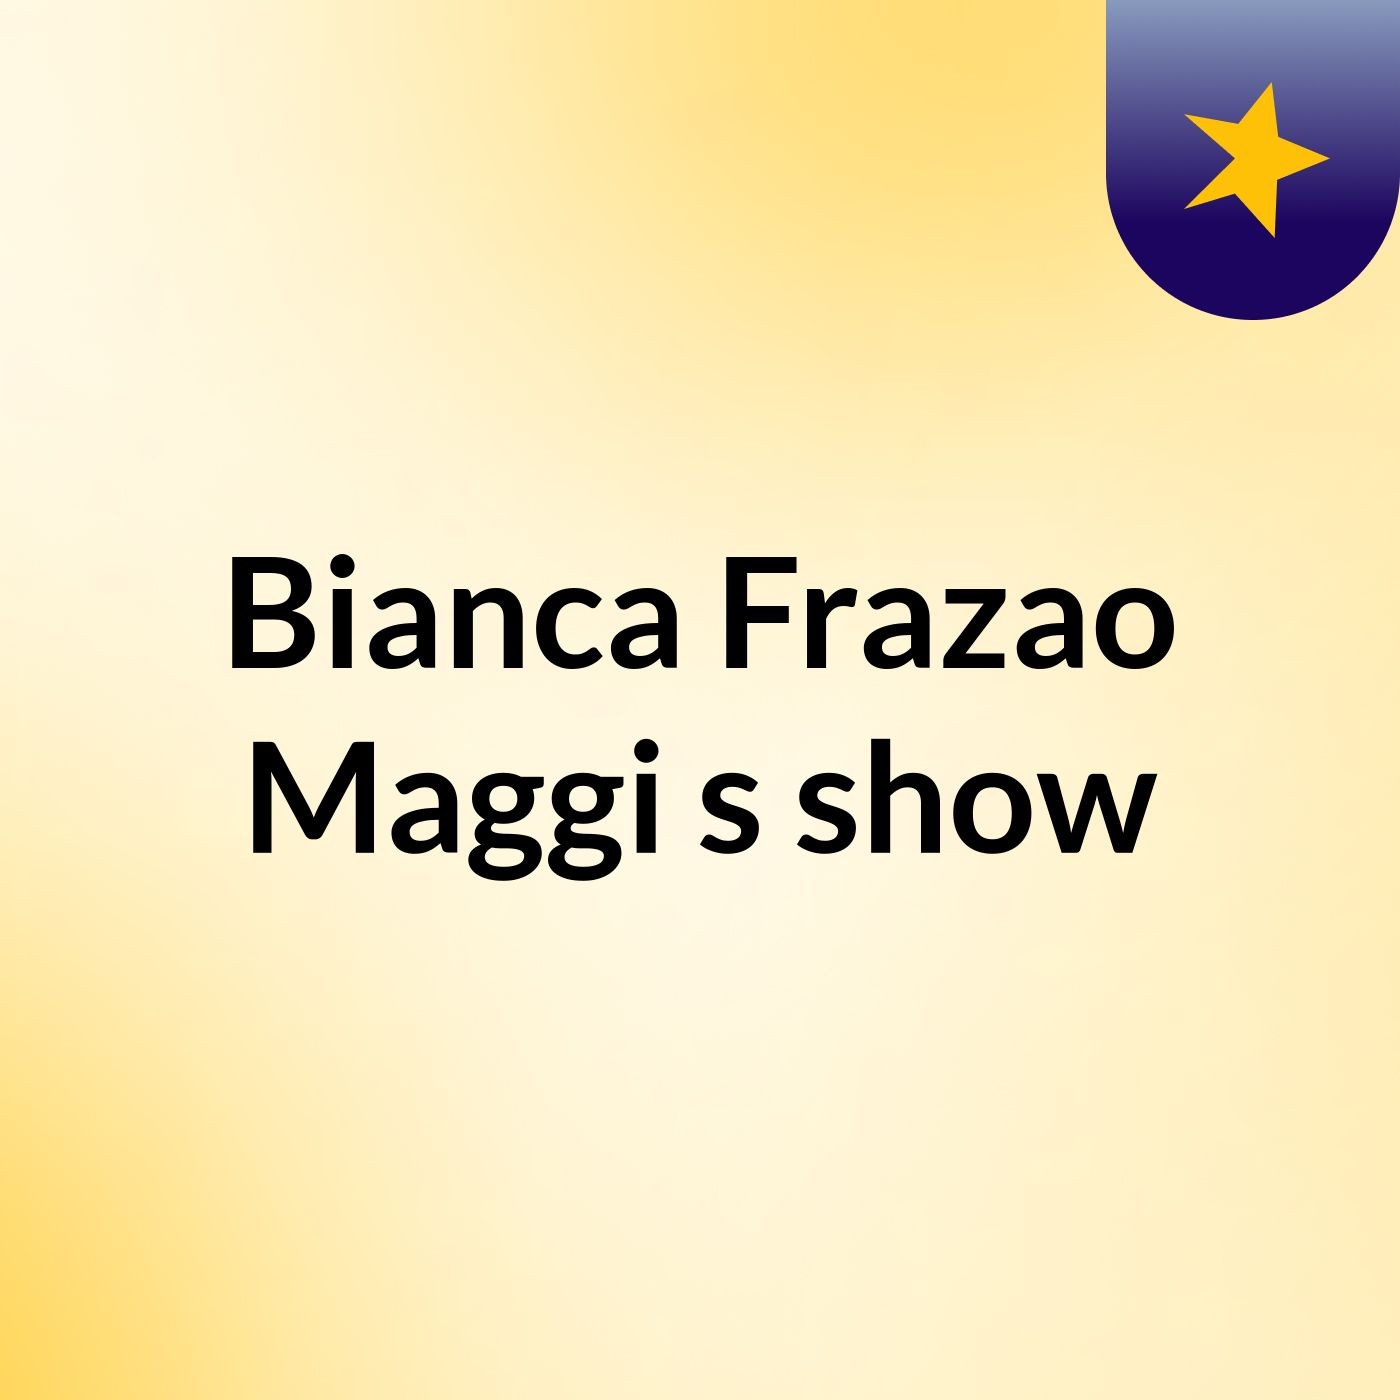 Bianca Frazao Maggi's show